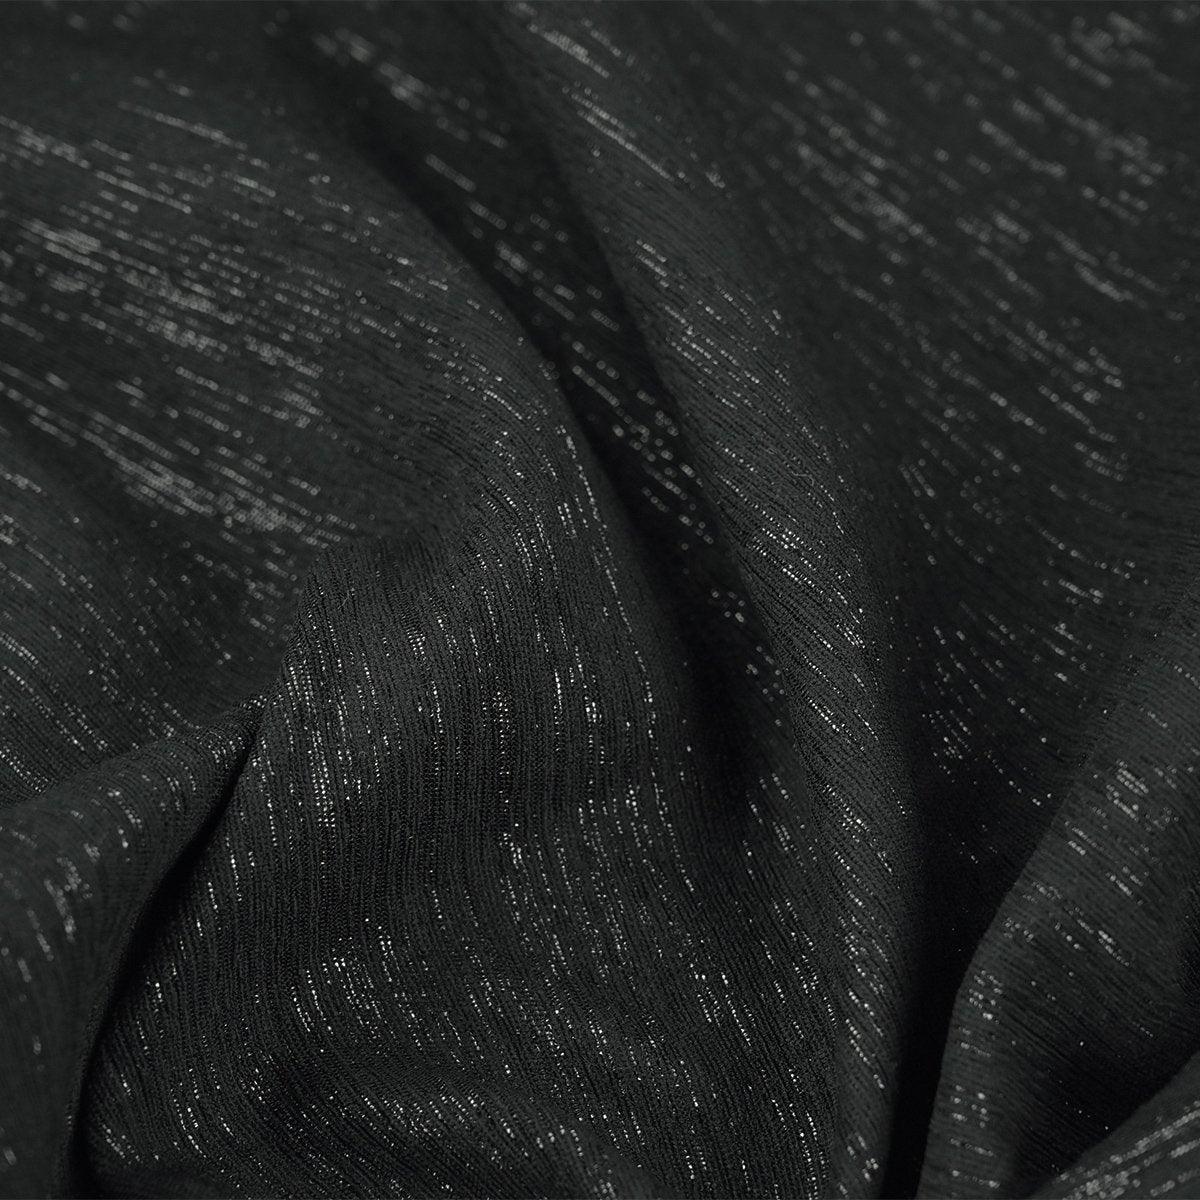 Black Grosgrain Fabric 99768